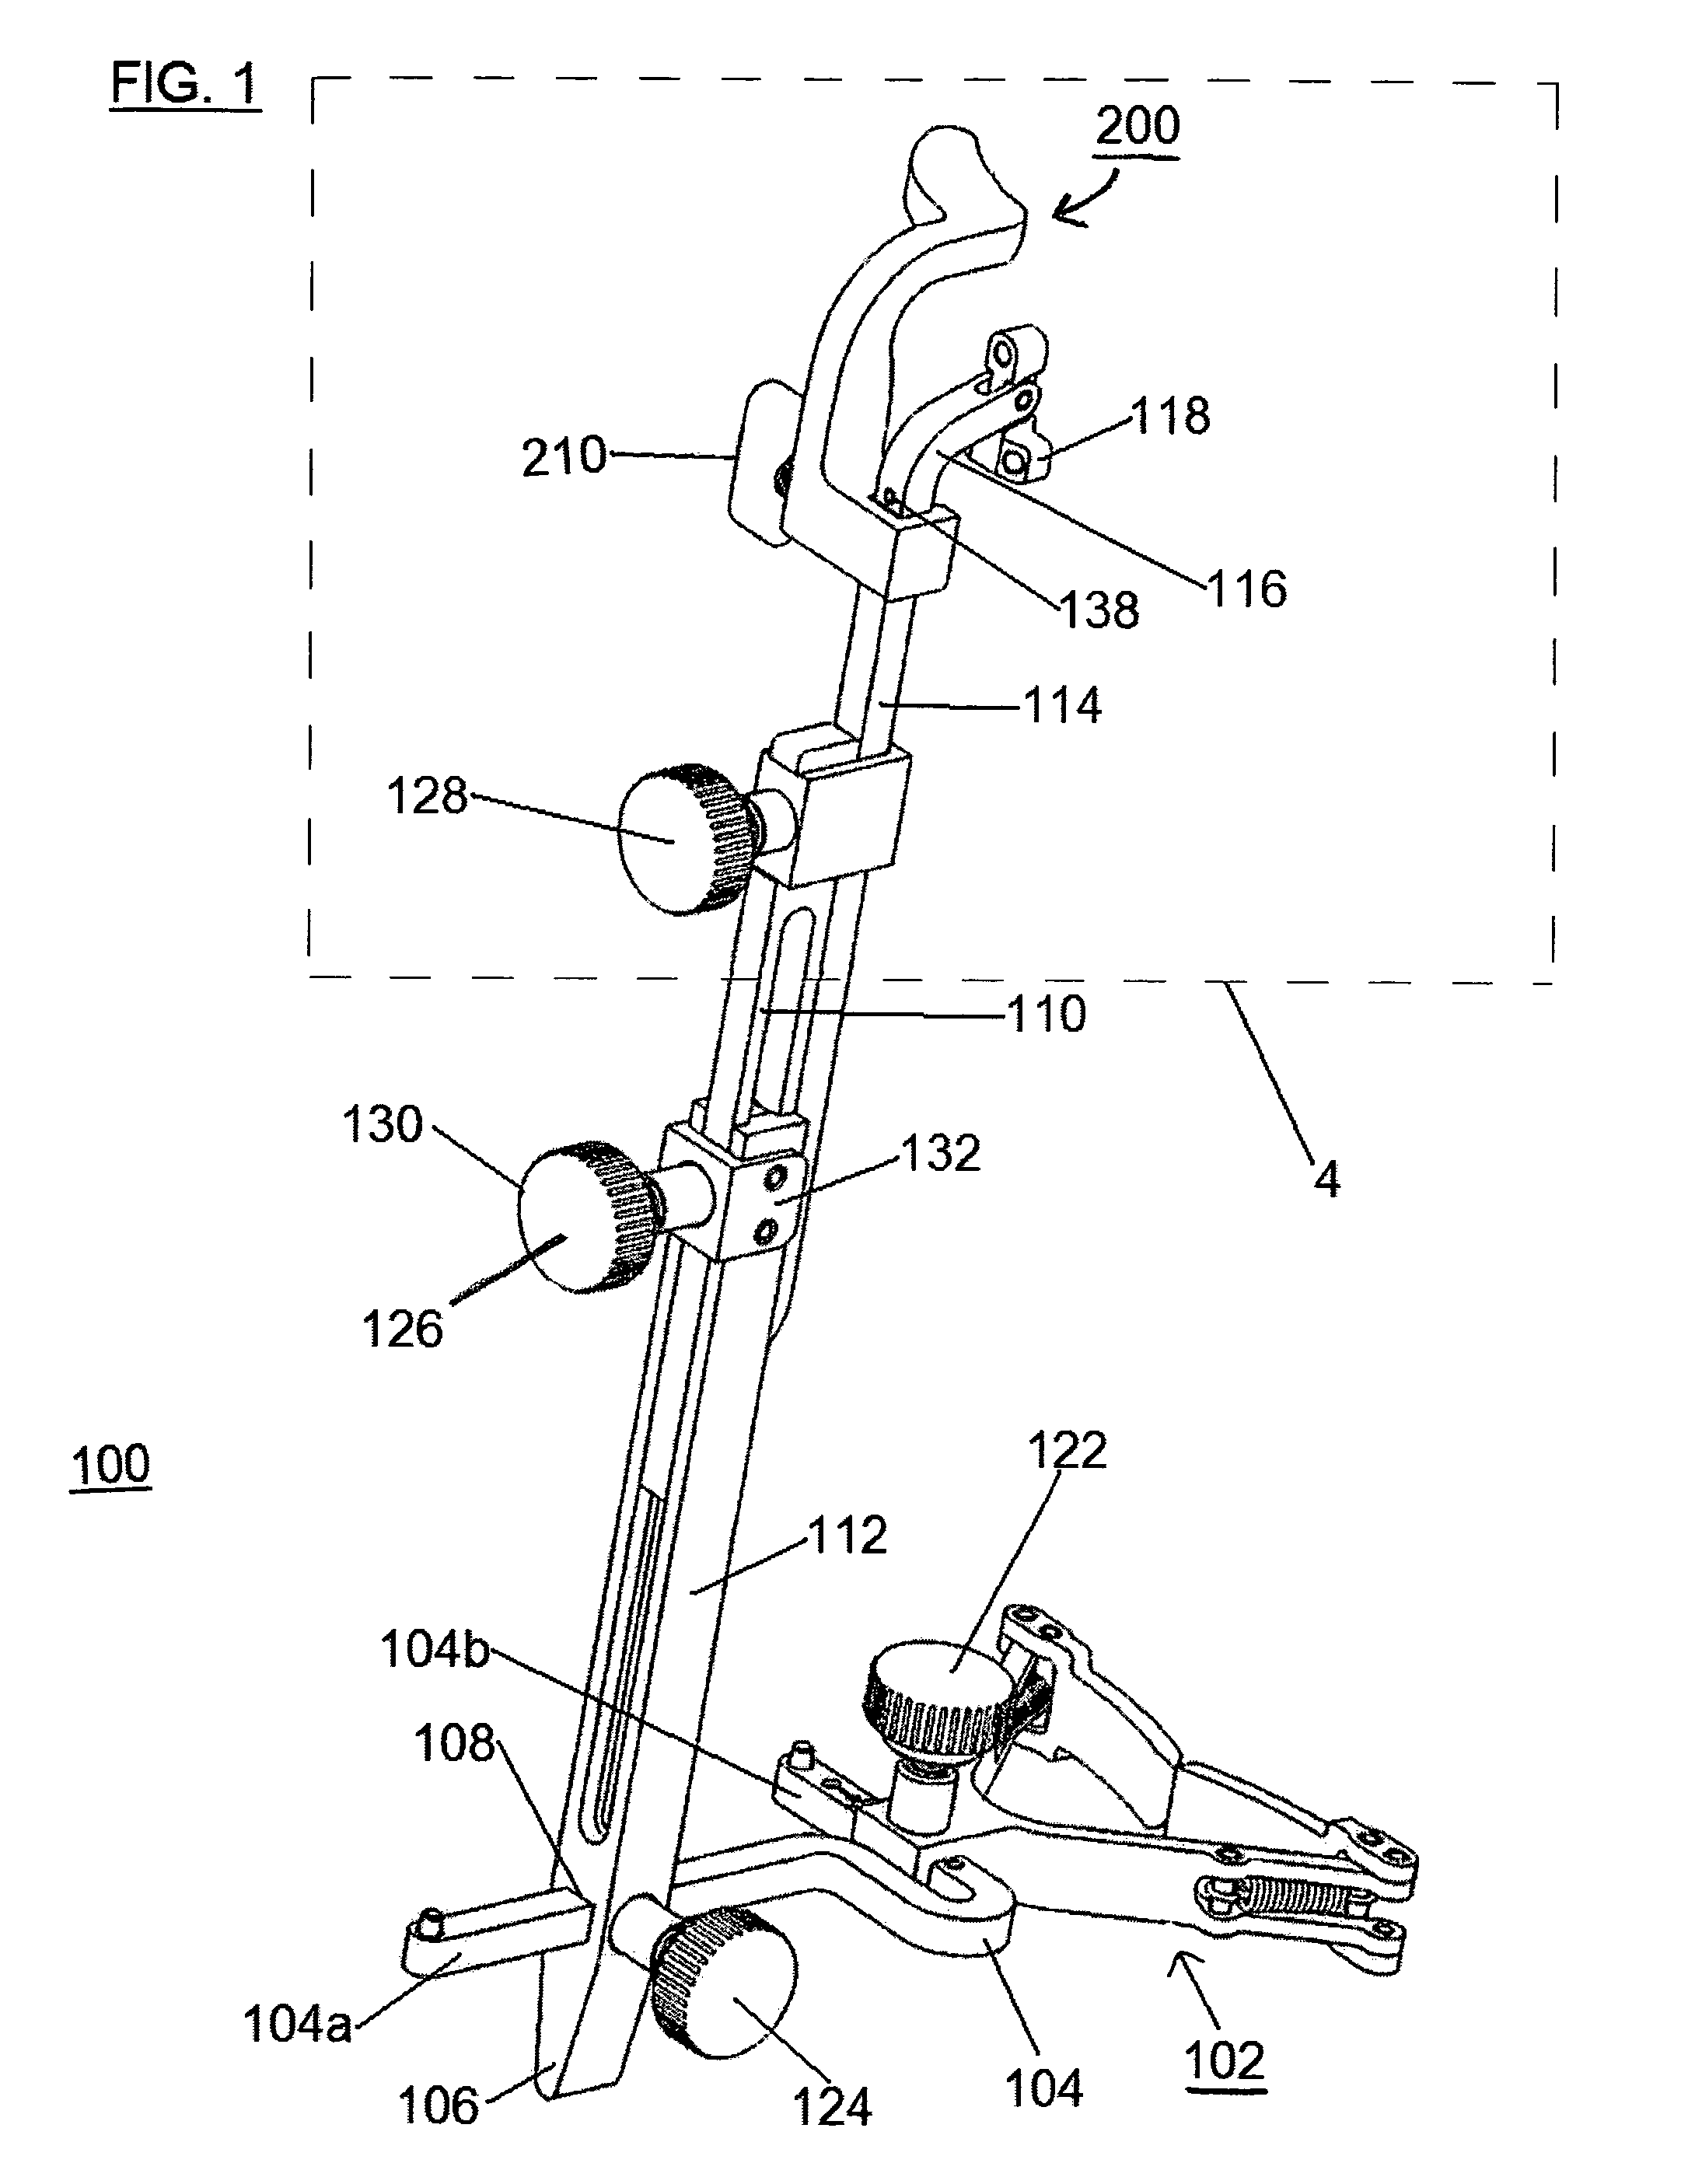 Unicondylar knee instrument system